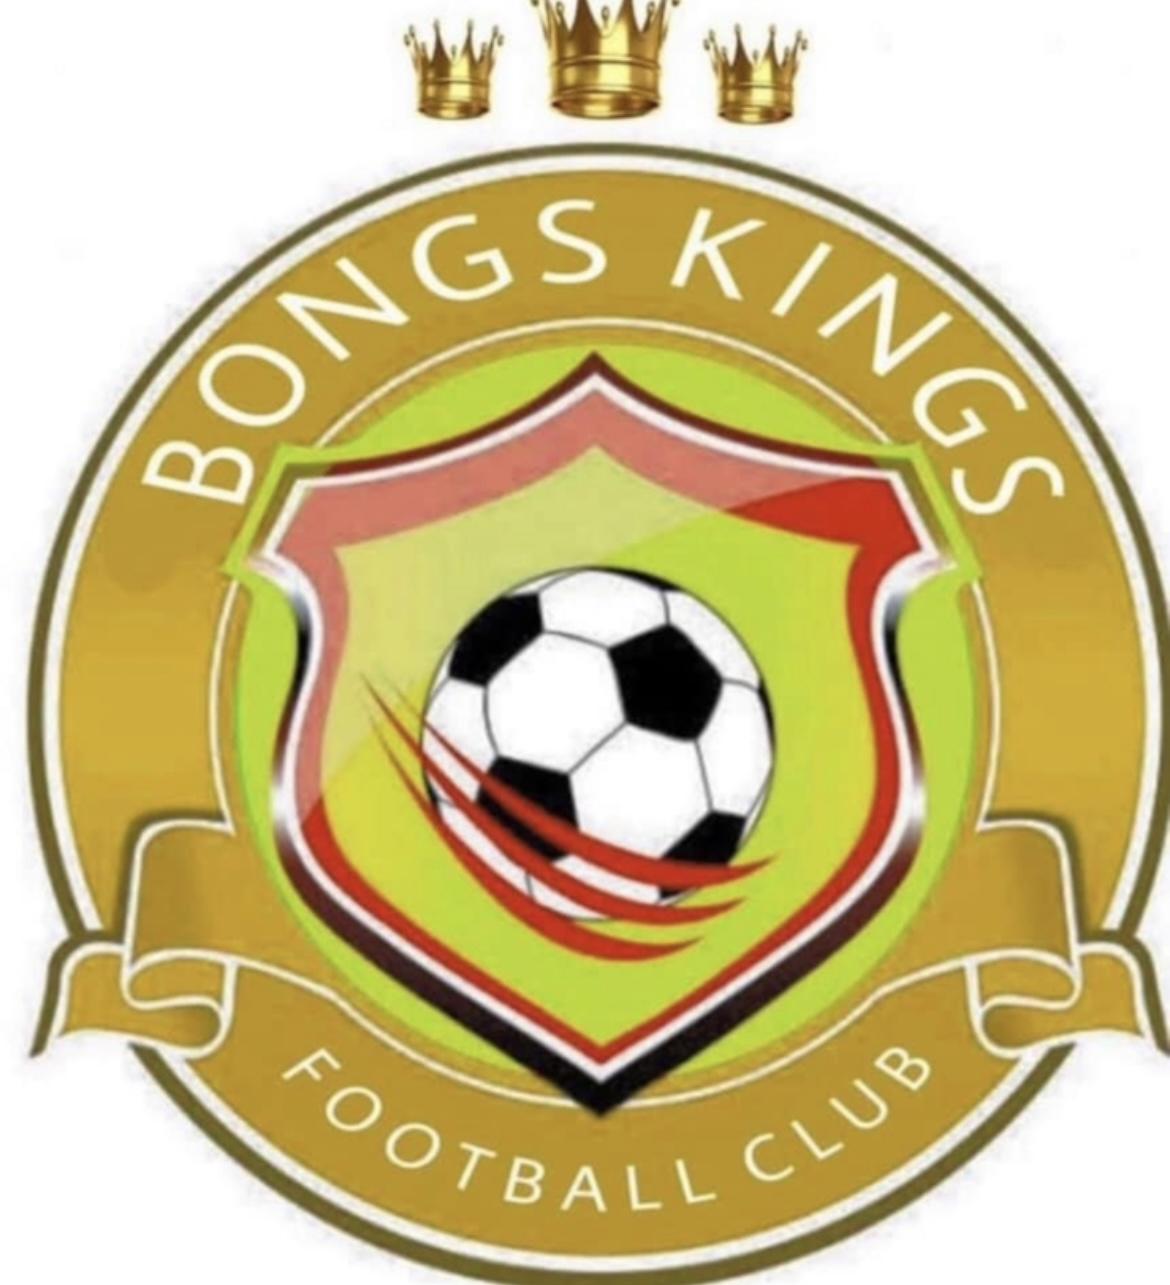 BONGS KINGS FOOTBALL CLUB